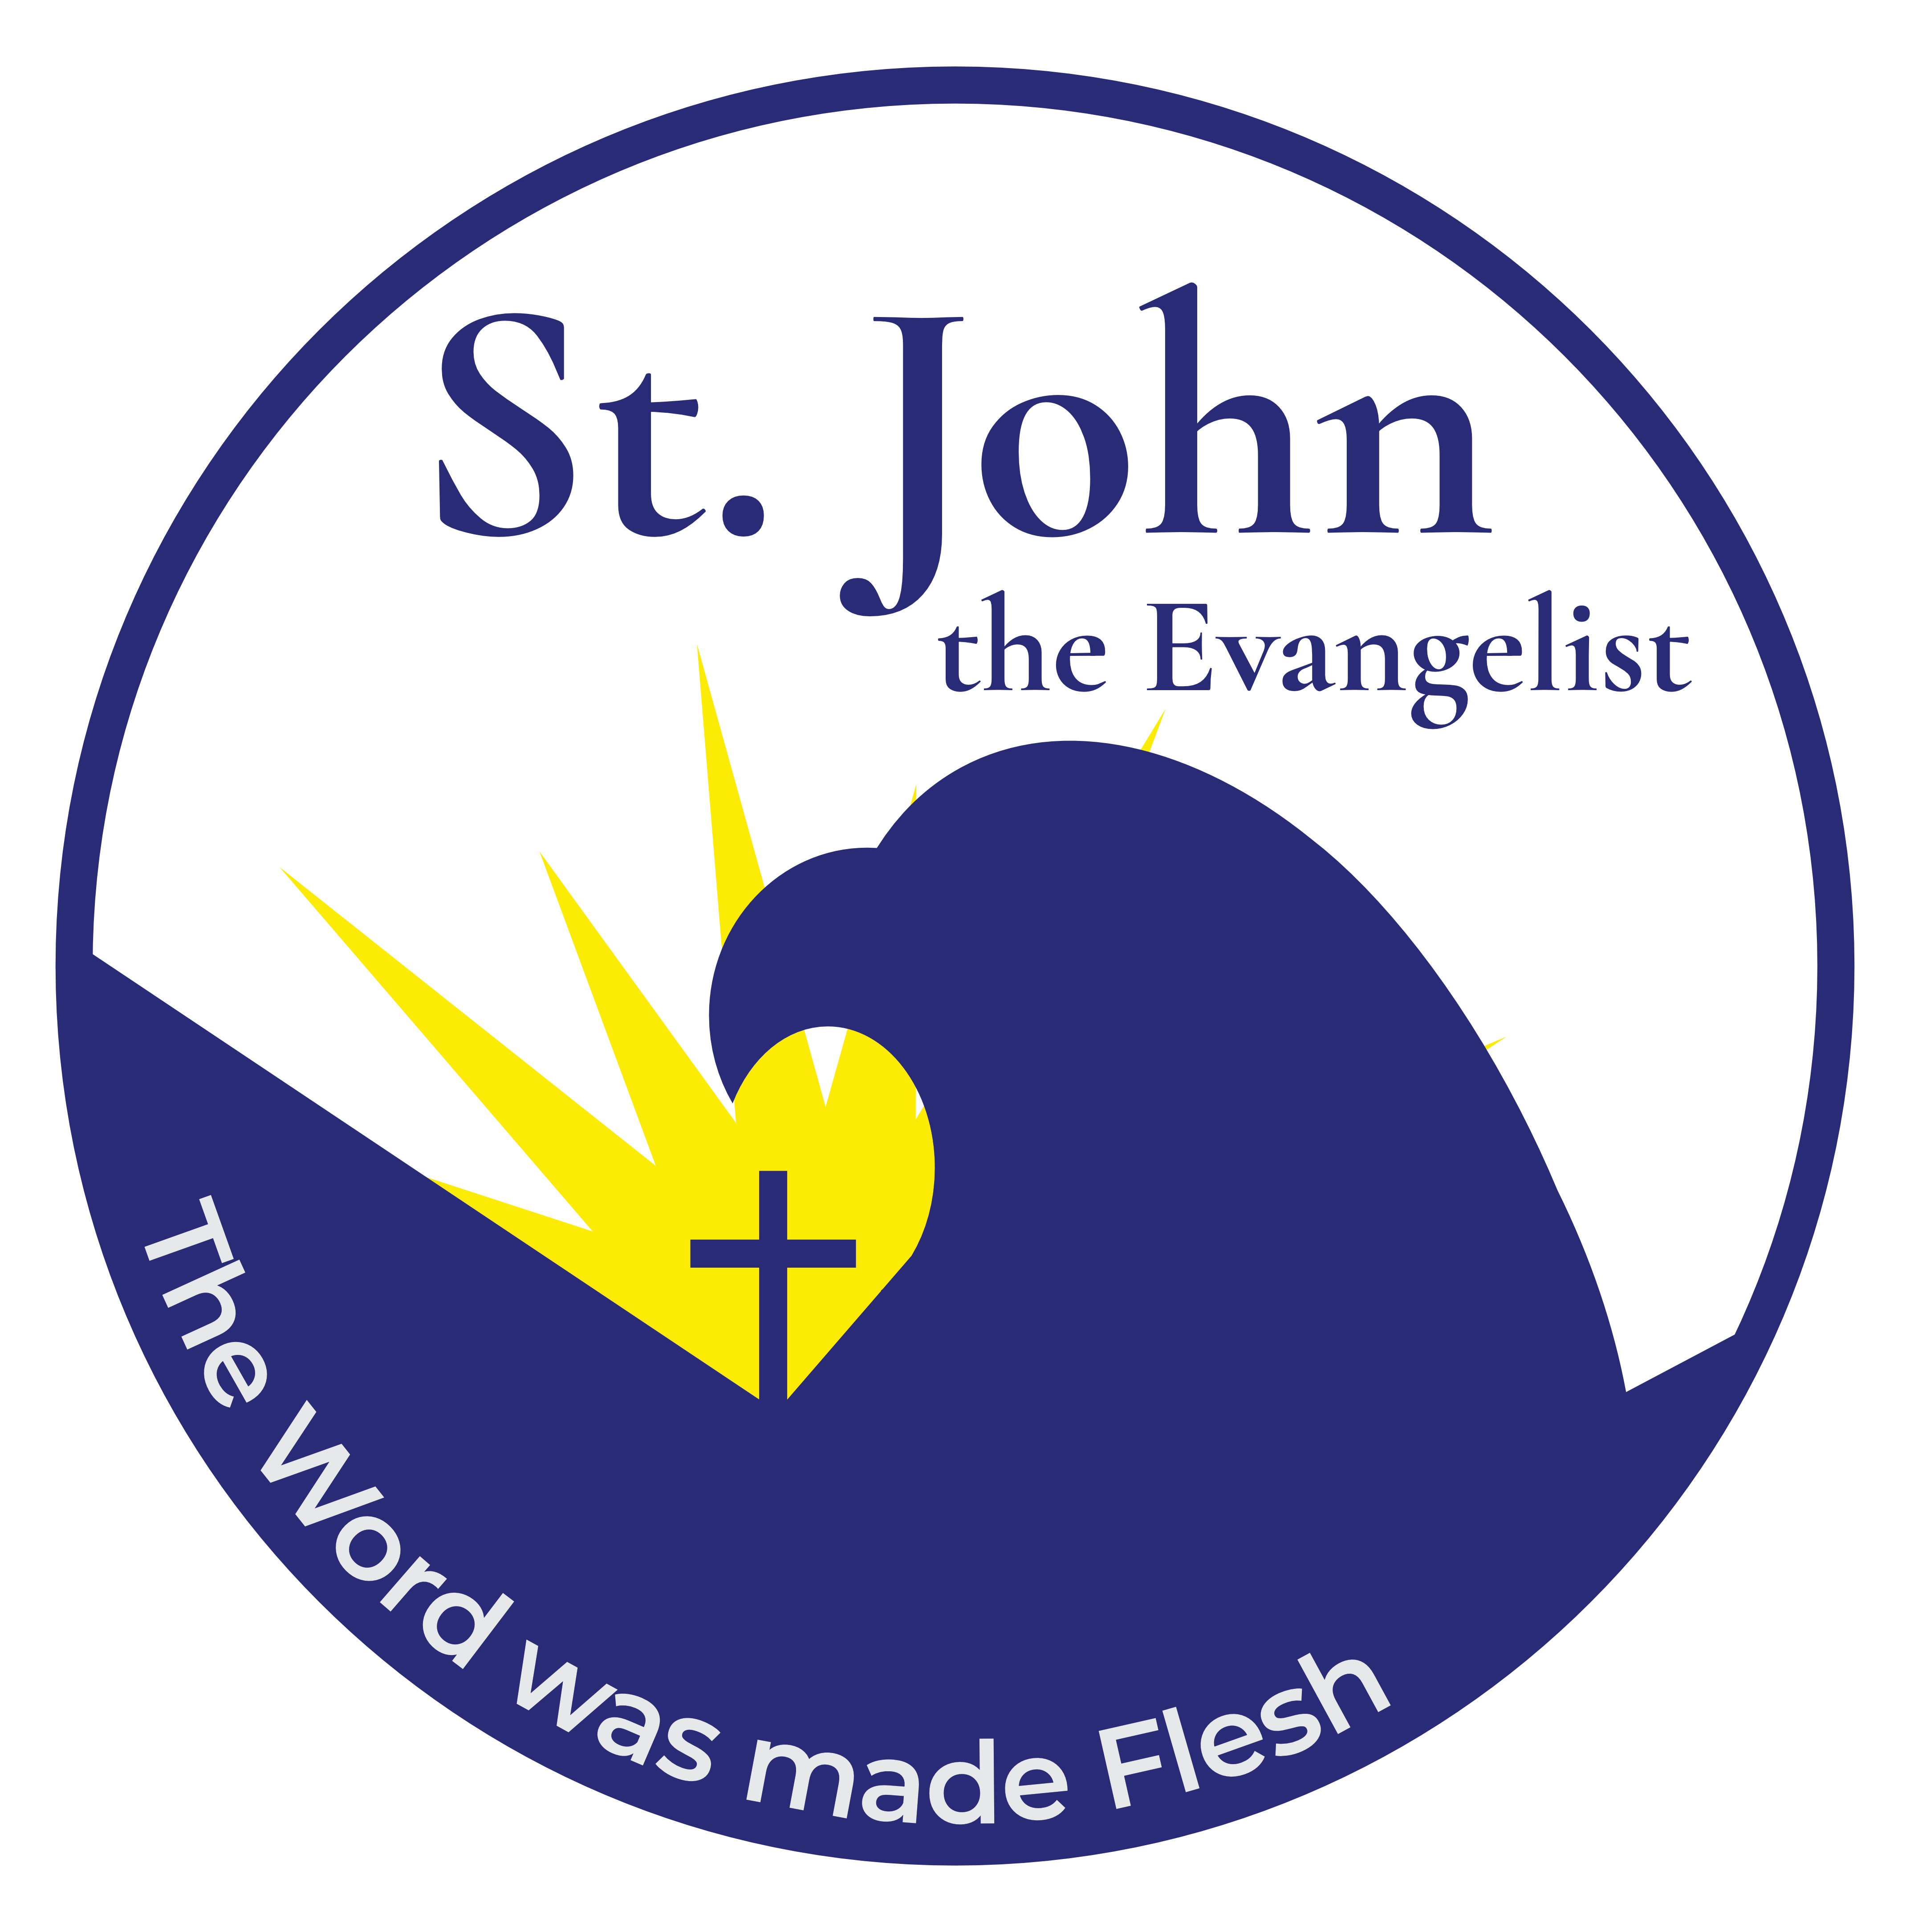 St. John the Evangelist Catholic Church of Valley